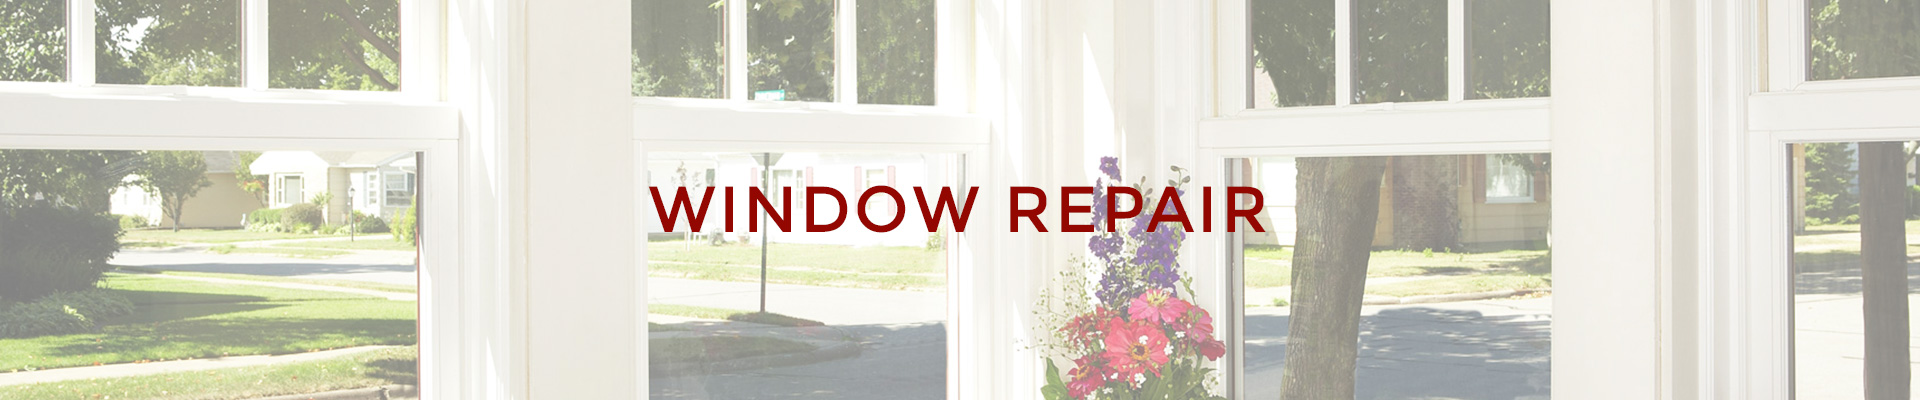 window repair banner